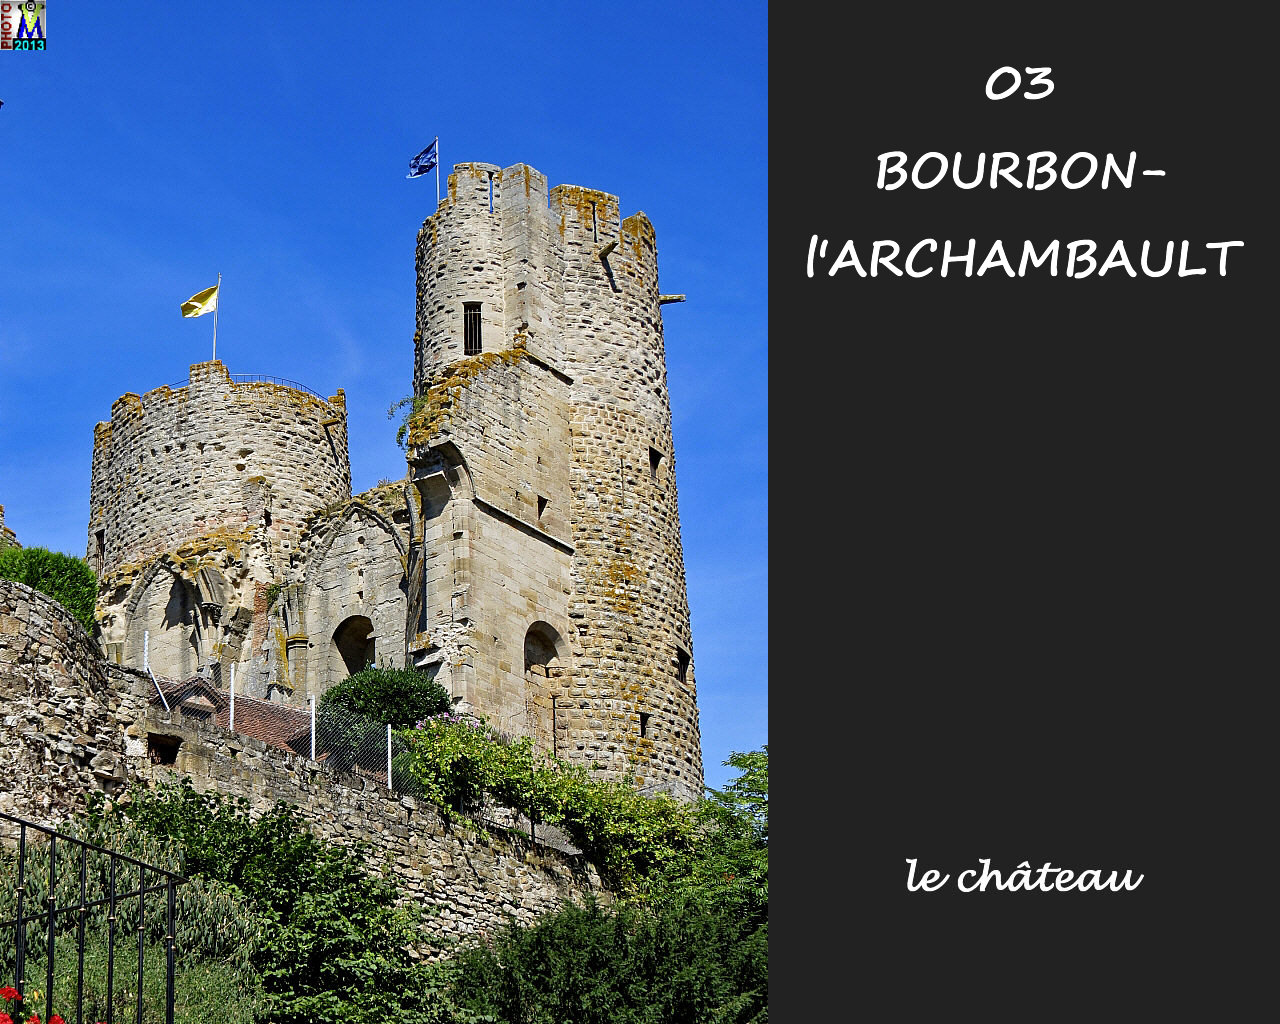 03BOURBON-ARCHAMBAULT_chateau_108.jpg